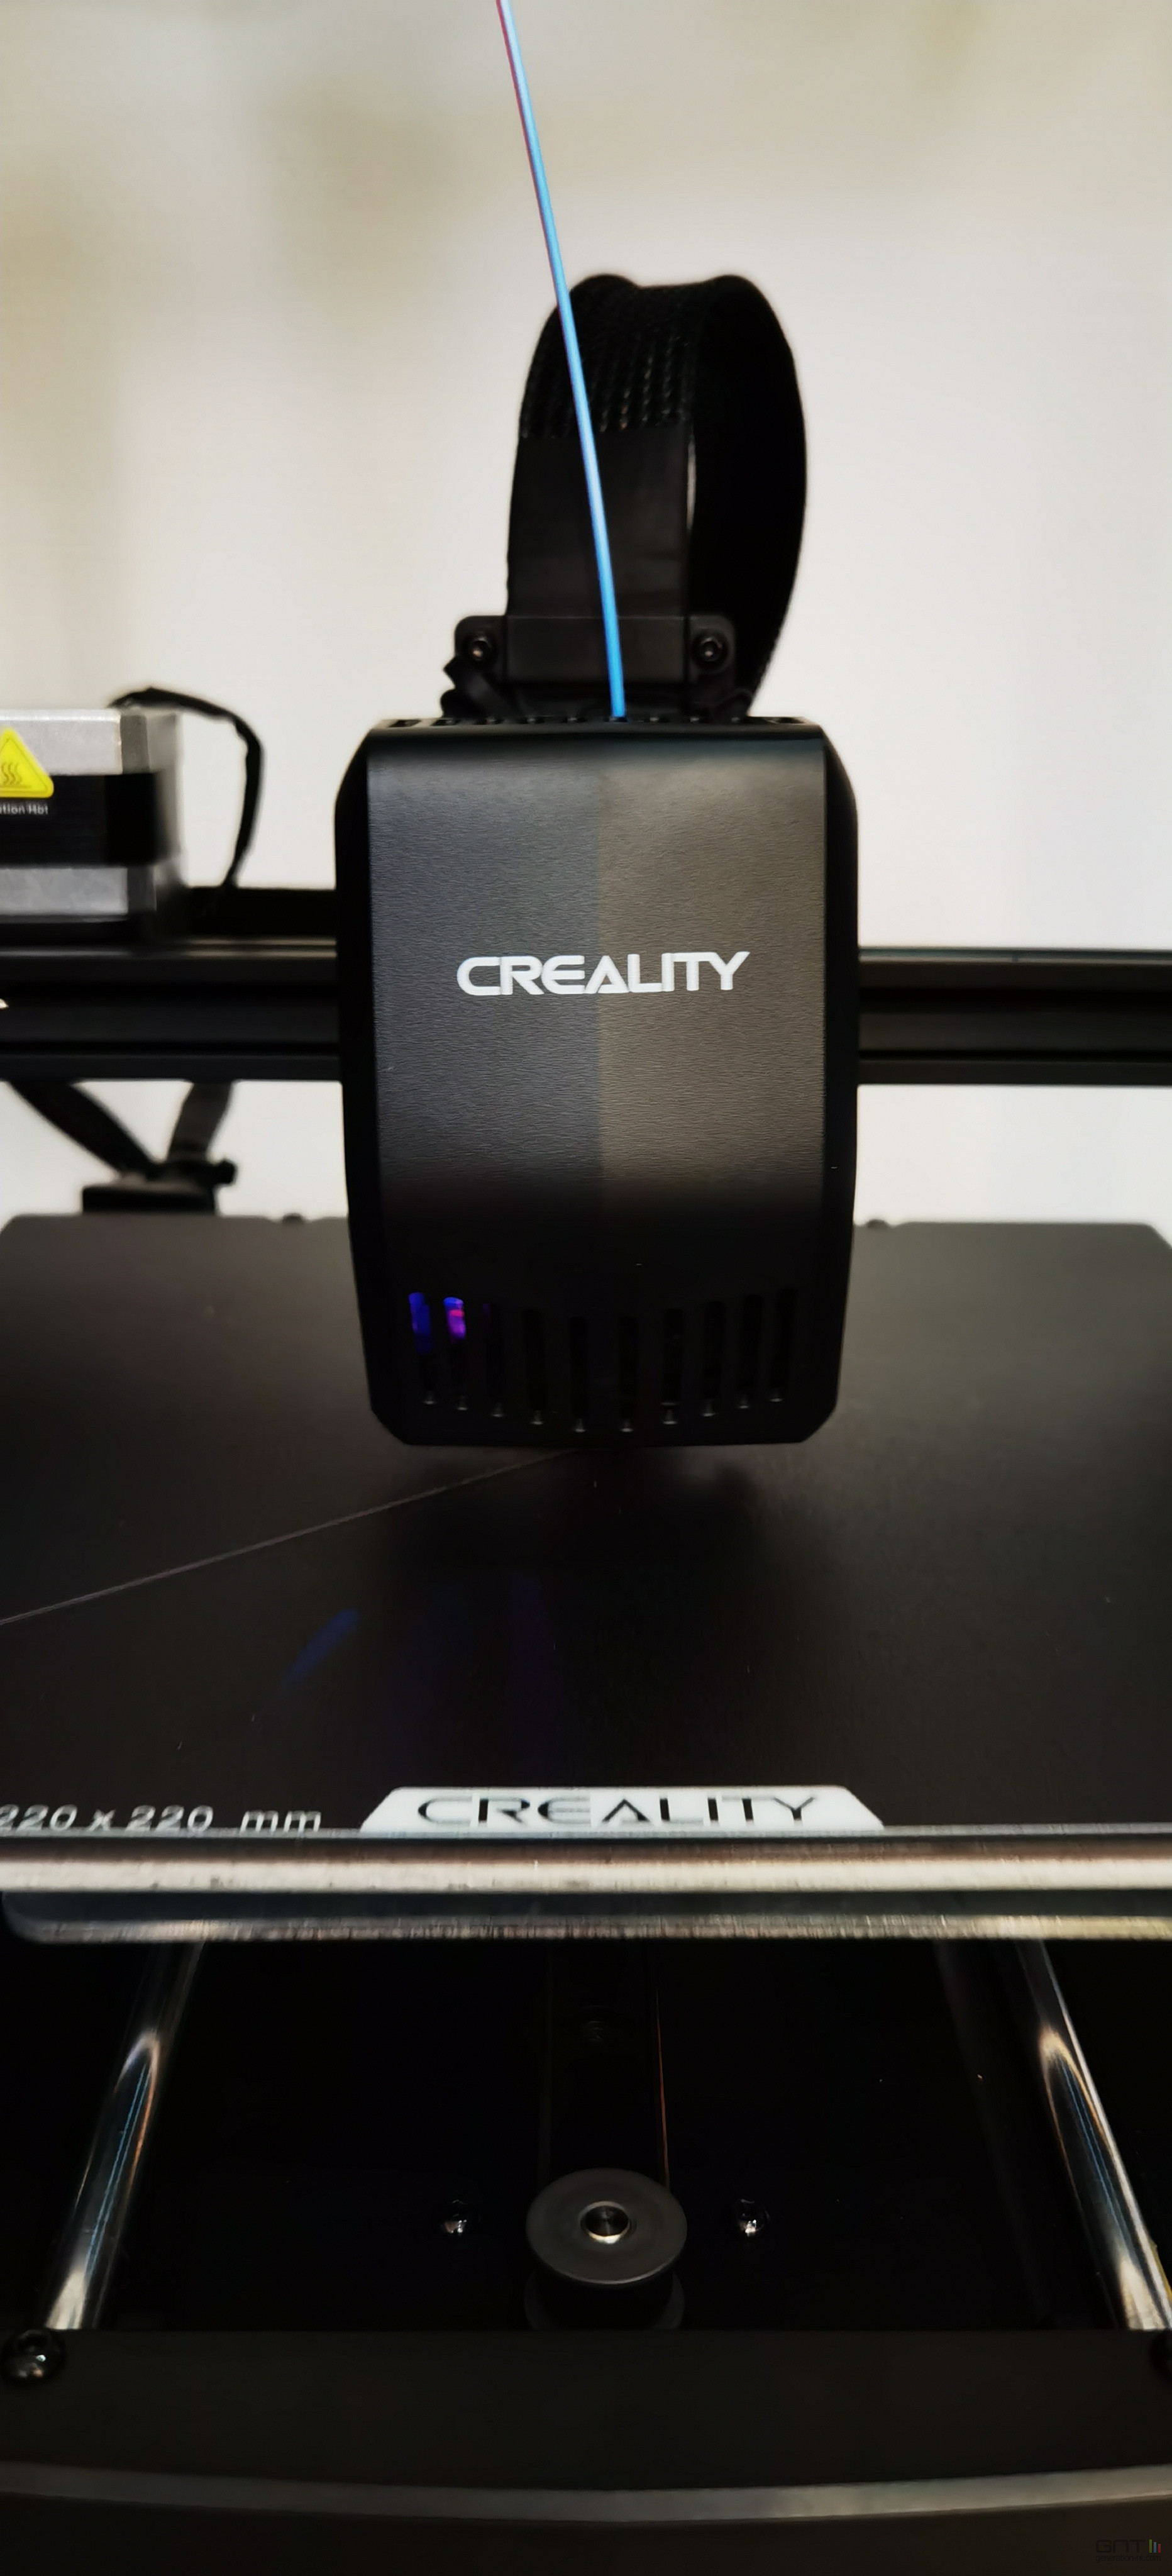 Imprimante 3D Creality Ender 3 V3 SE : Test / Avis & Meilleur Prix